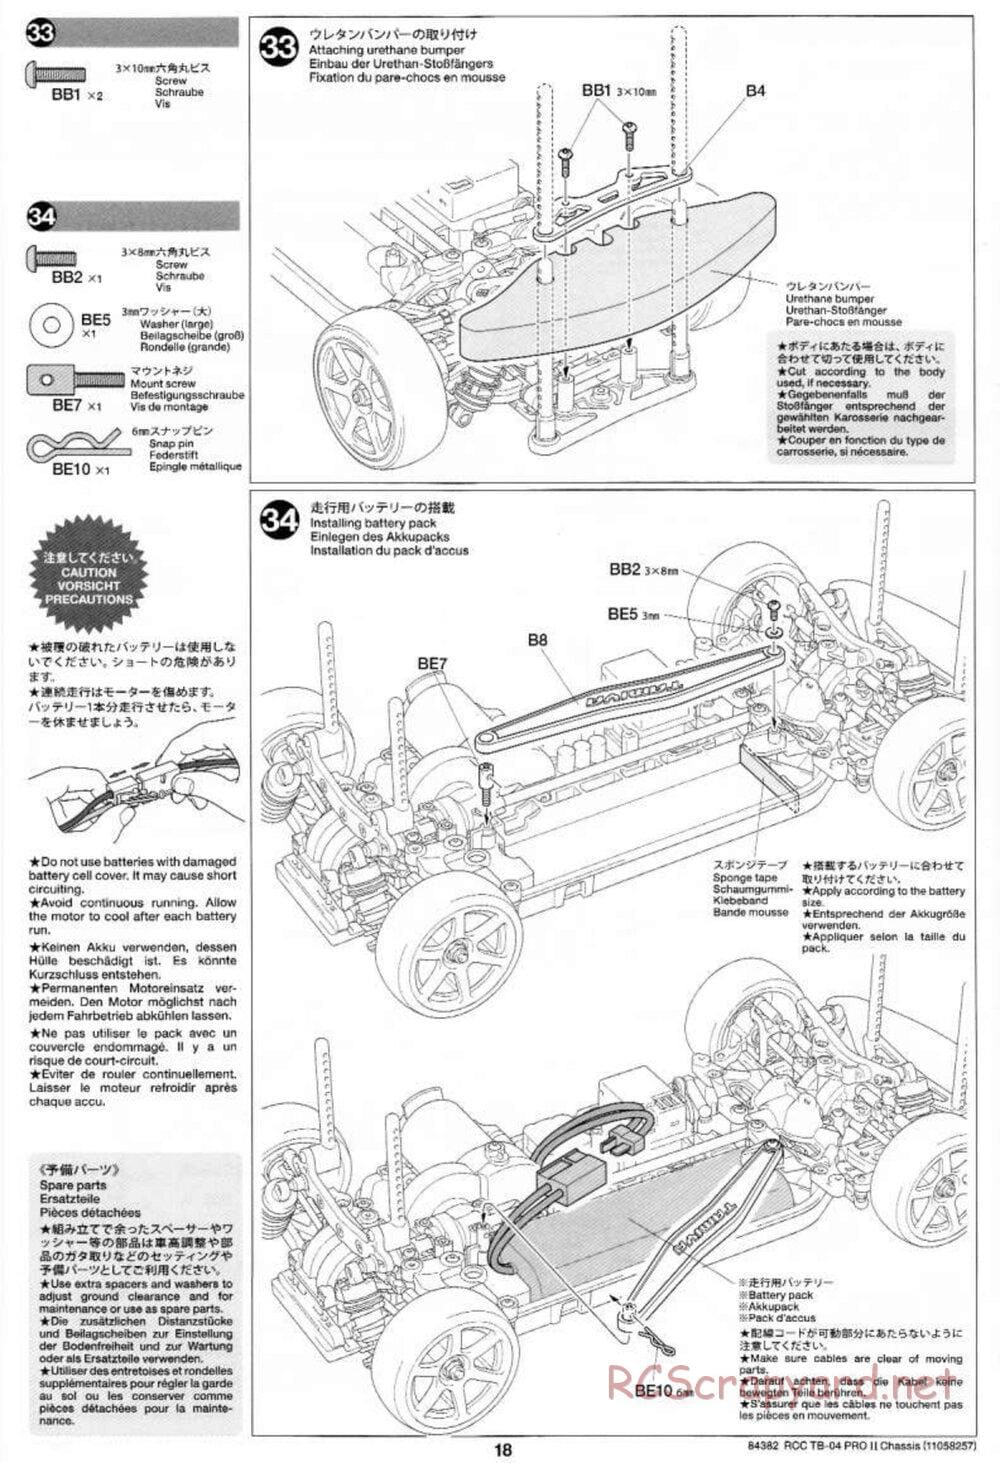 Tamiya - TB-04 Pro II Chassis - Manual - Page 18